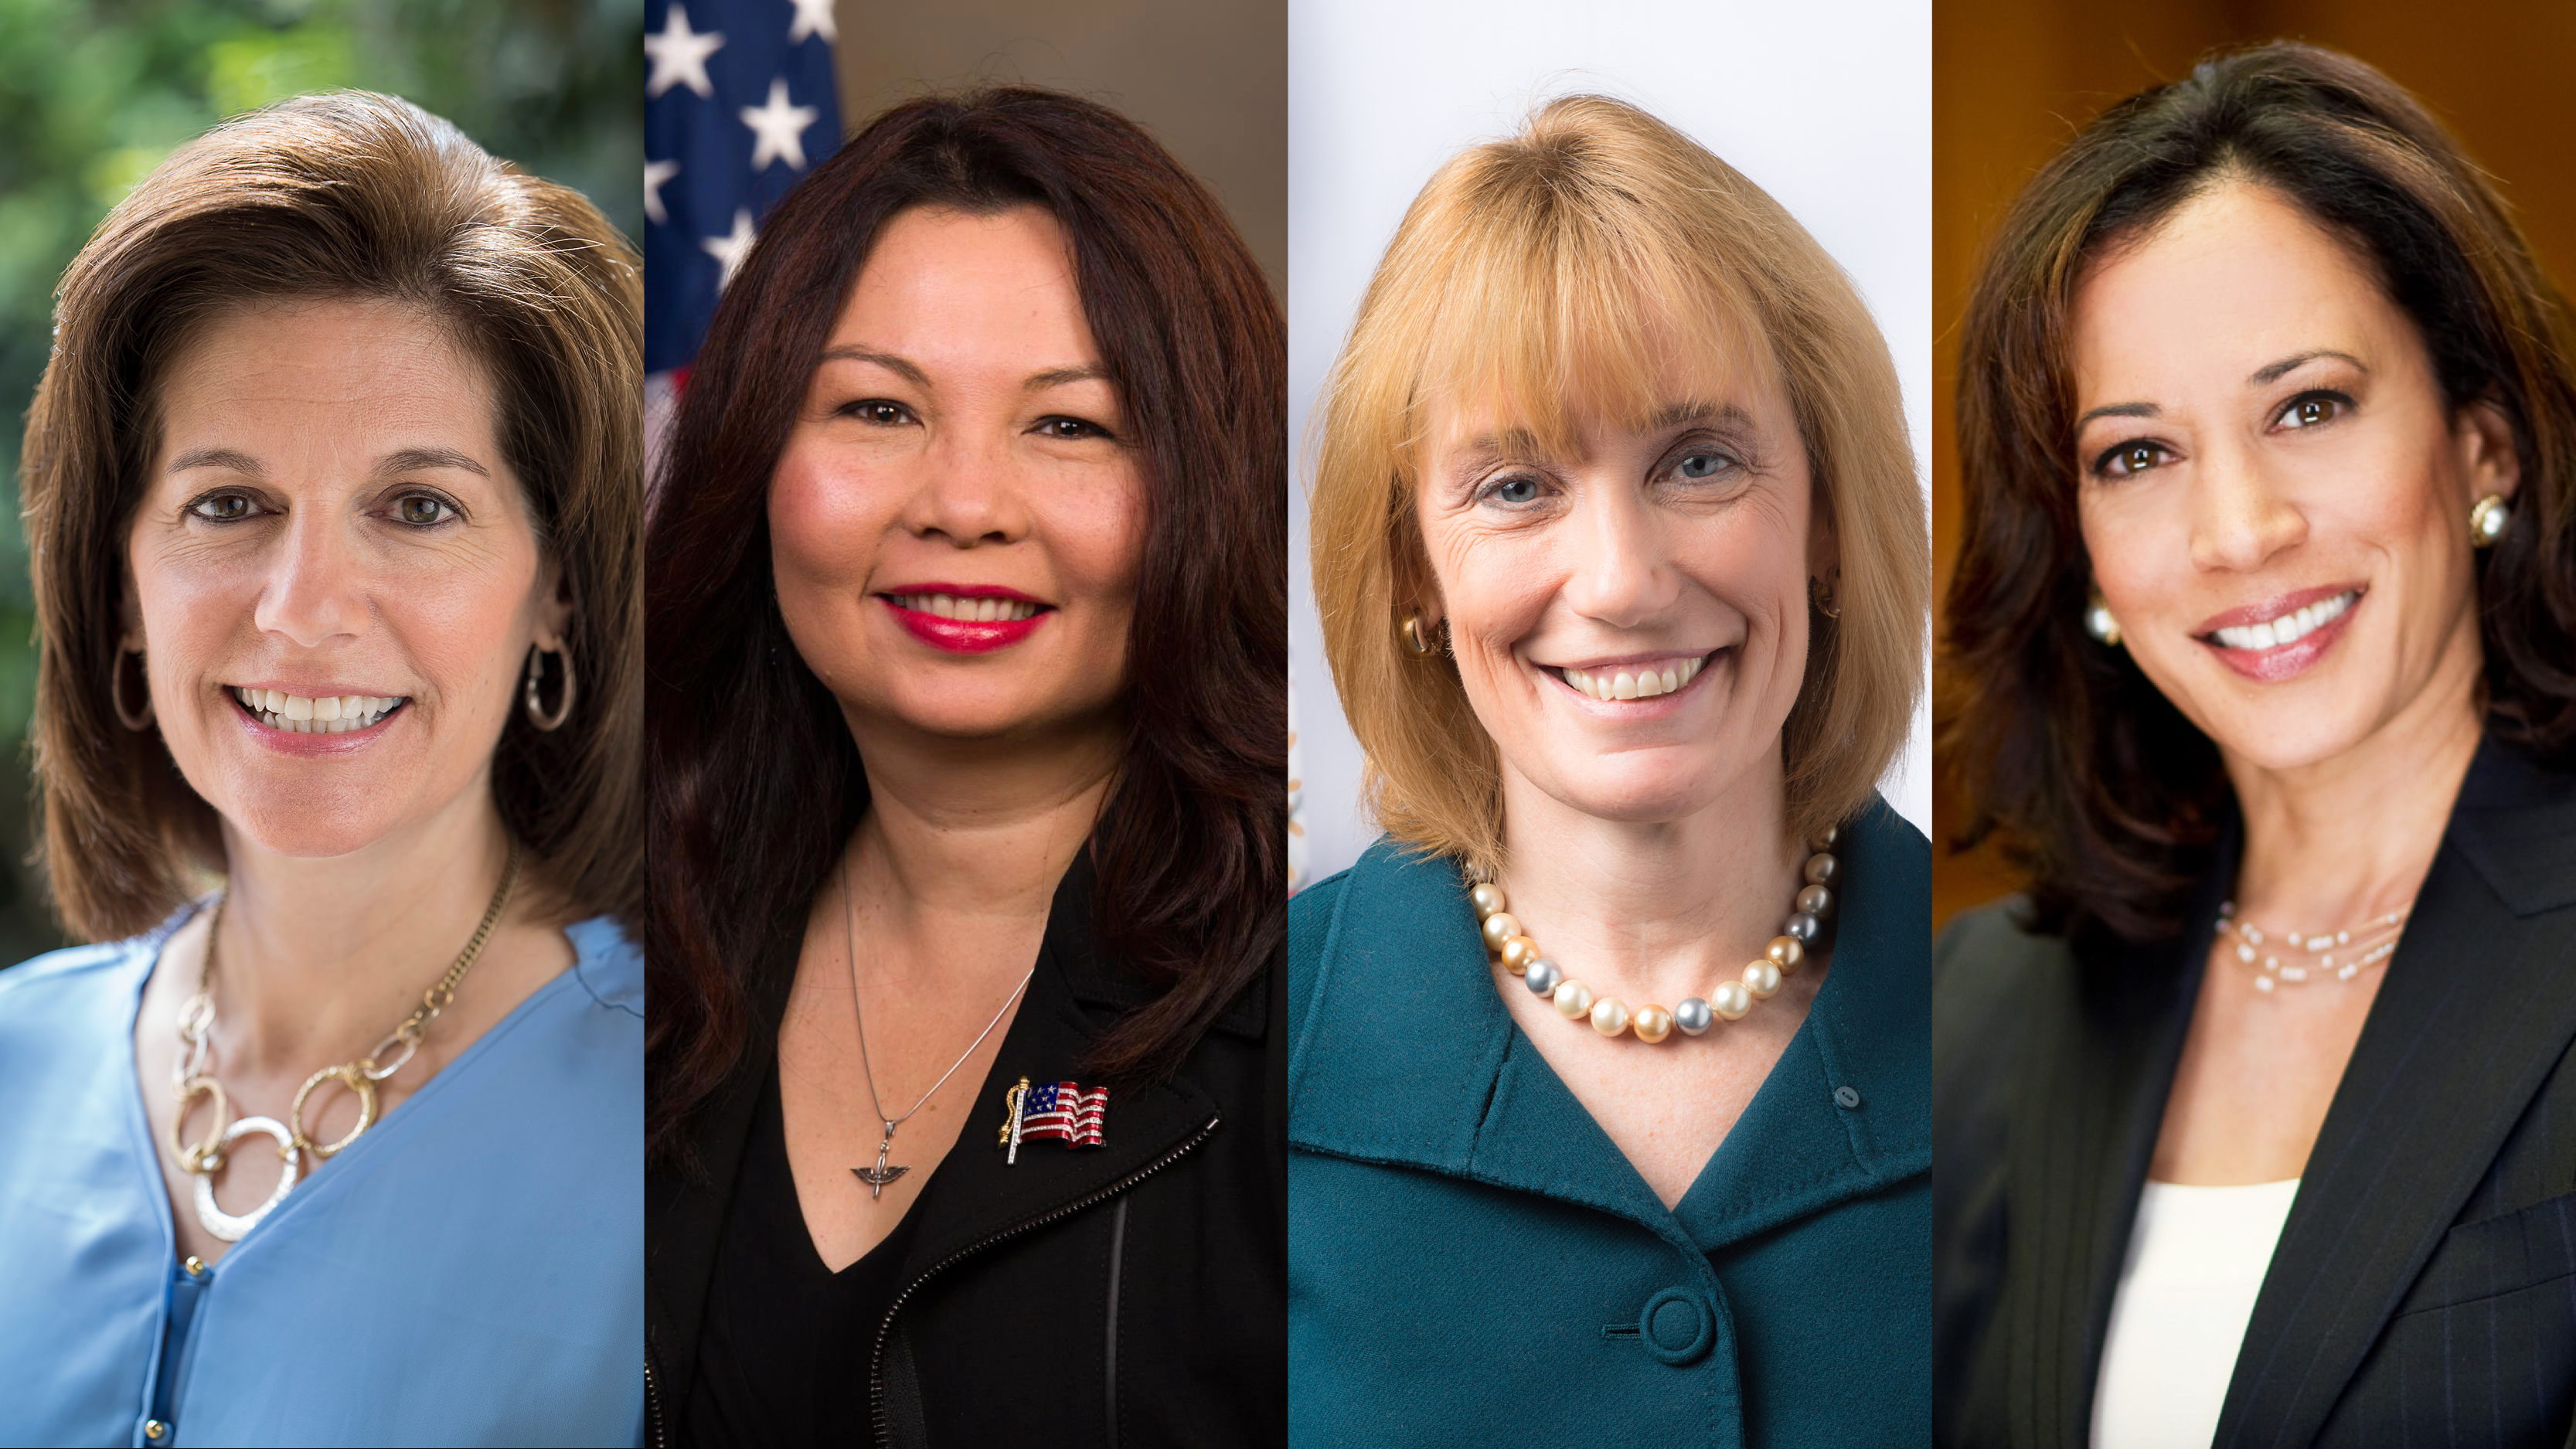 HRC Honors 4 ProEquality Female Senators Who Are Making History